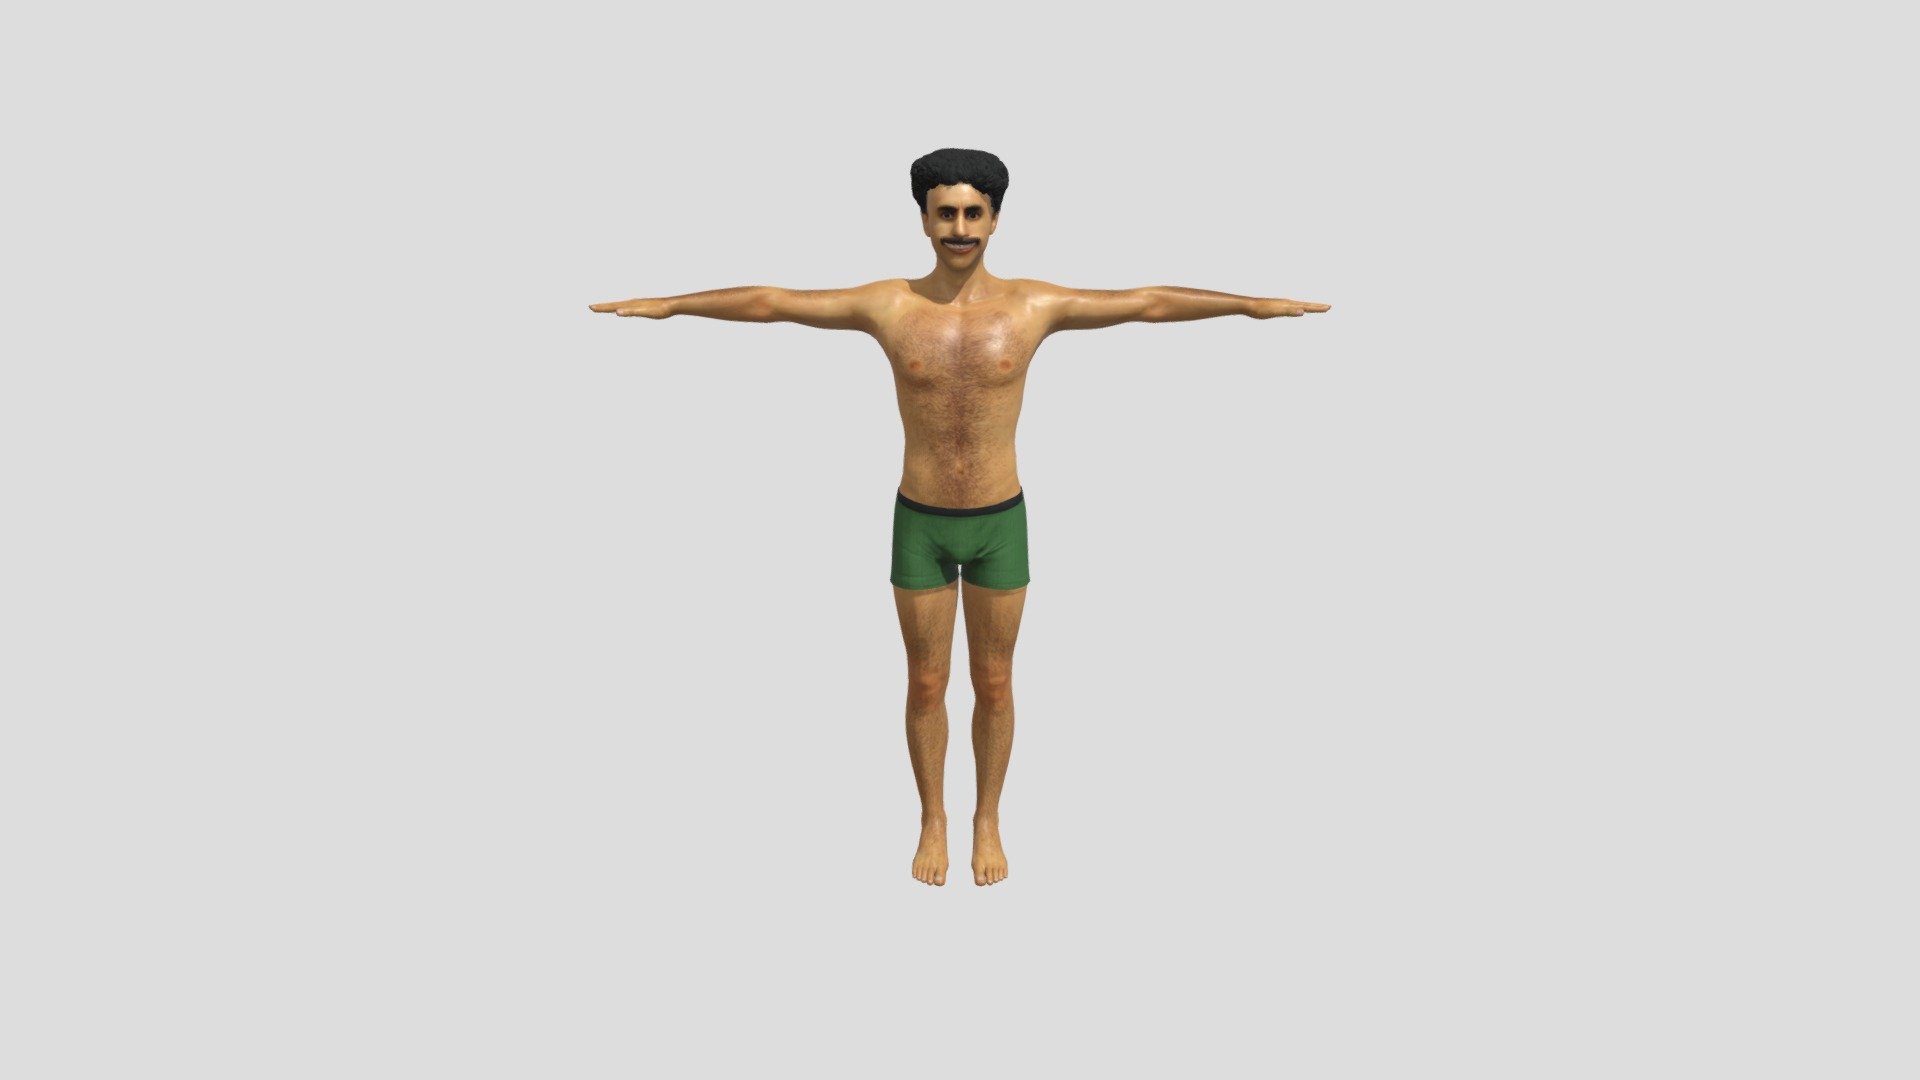 Borat in Boxers
Fully rigged
128 BlendShapes - Borat - 3D model by LeVieux.Lzo 3d model